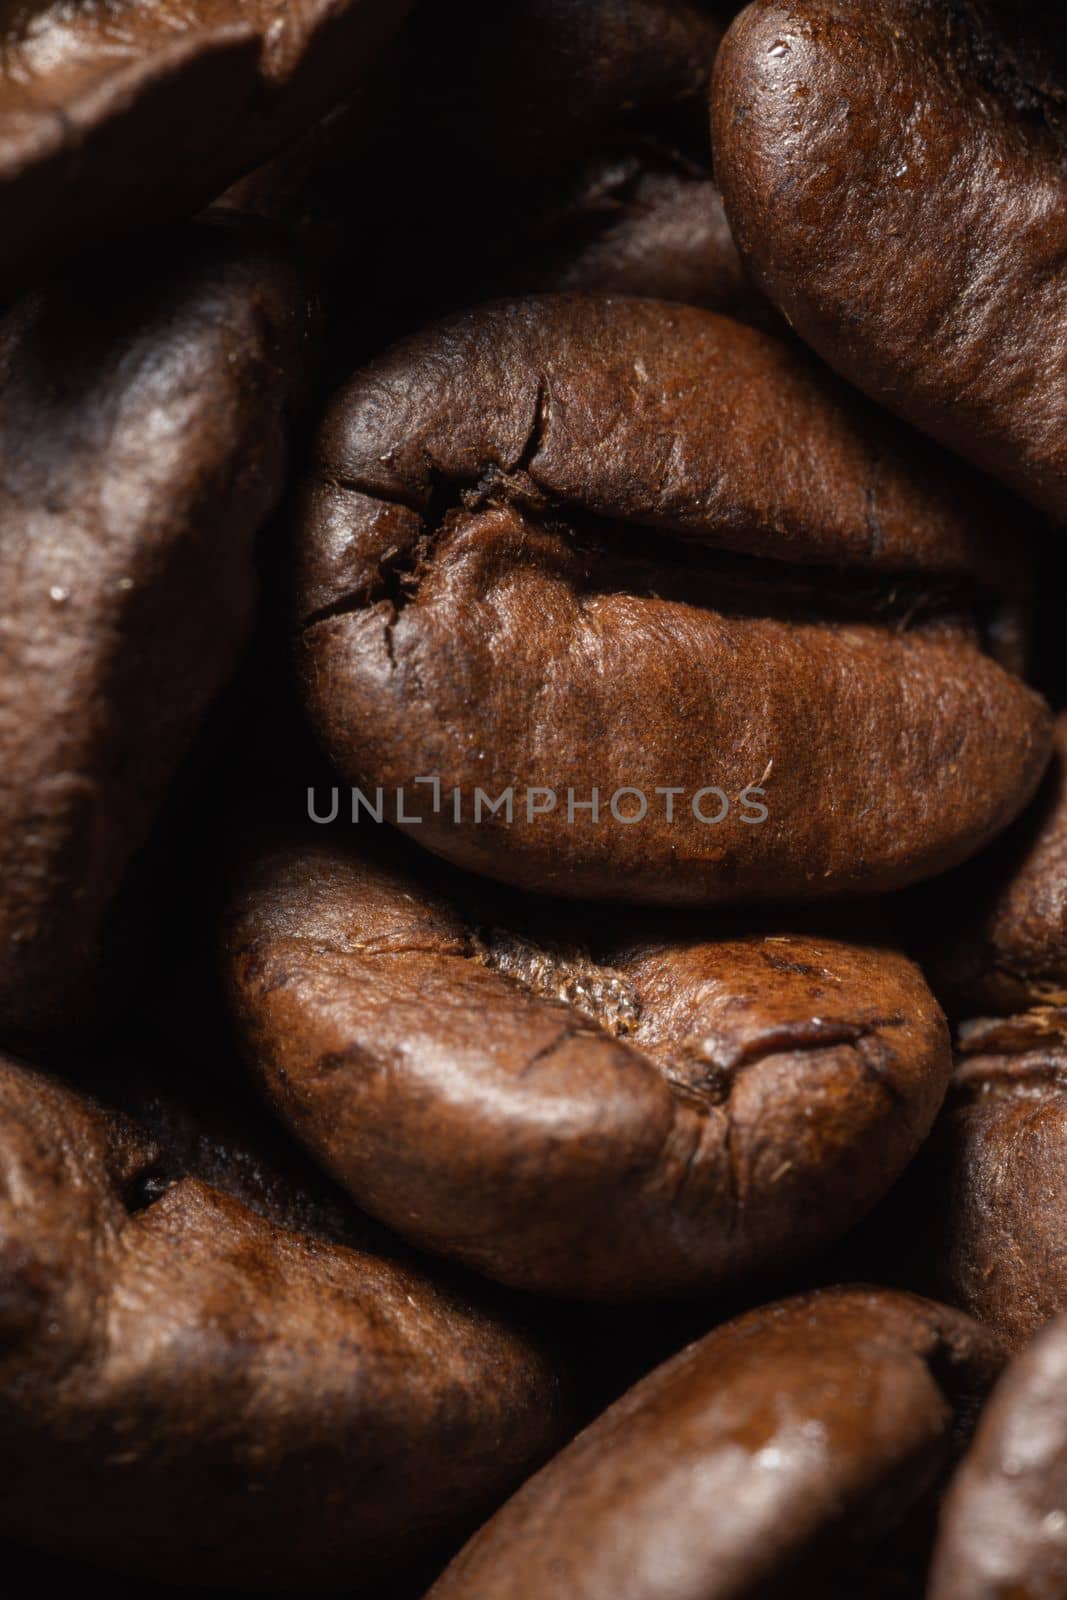 Roasted coffee beans background. Freshly roasted coffee beans background